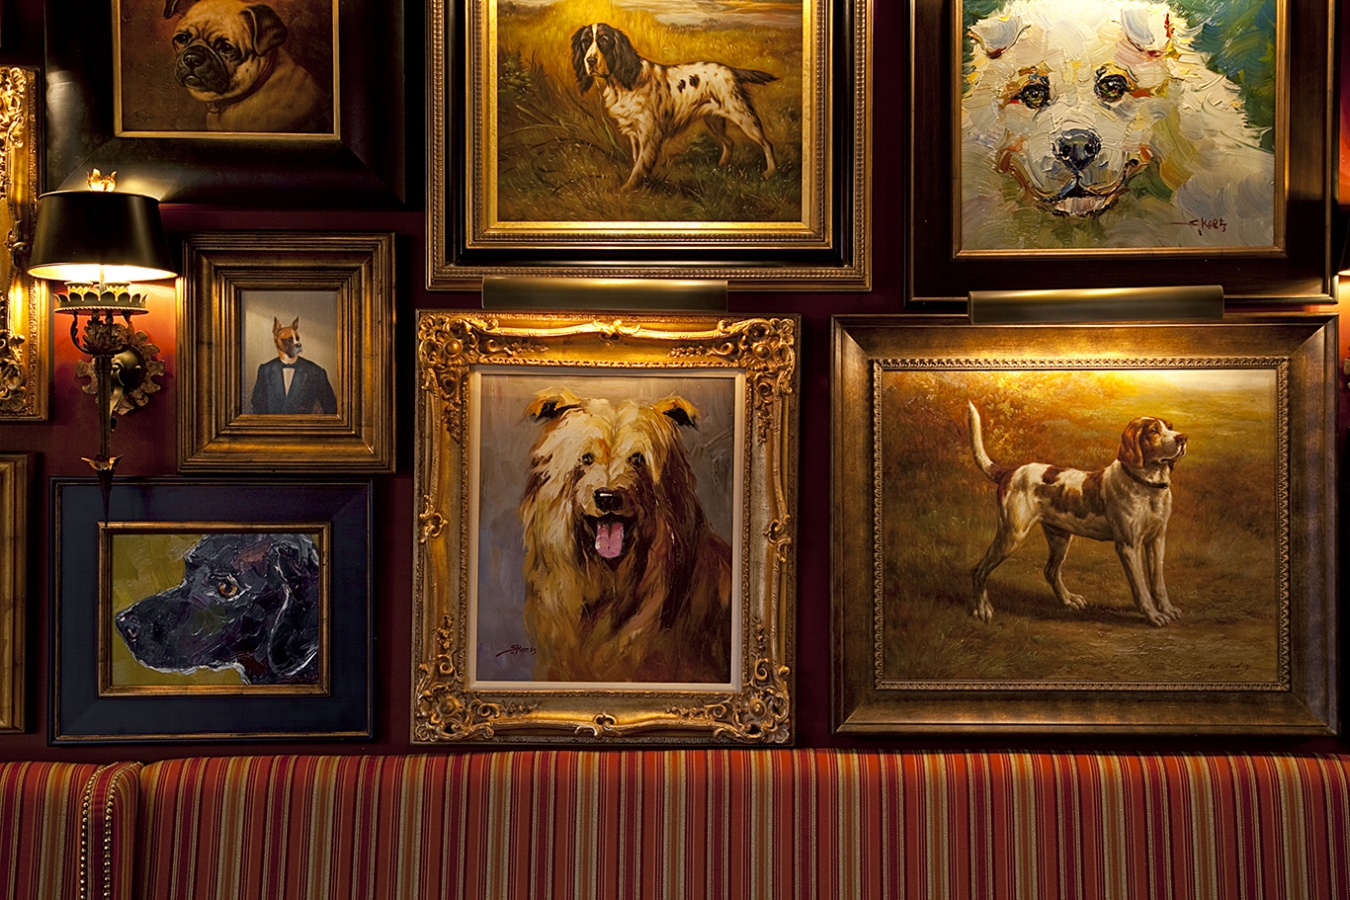 Dog portraits align the walls of White Dog Wayne